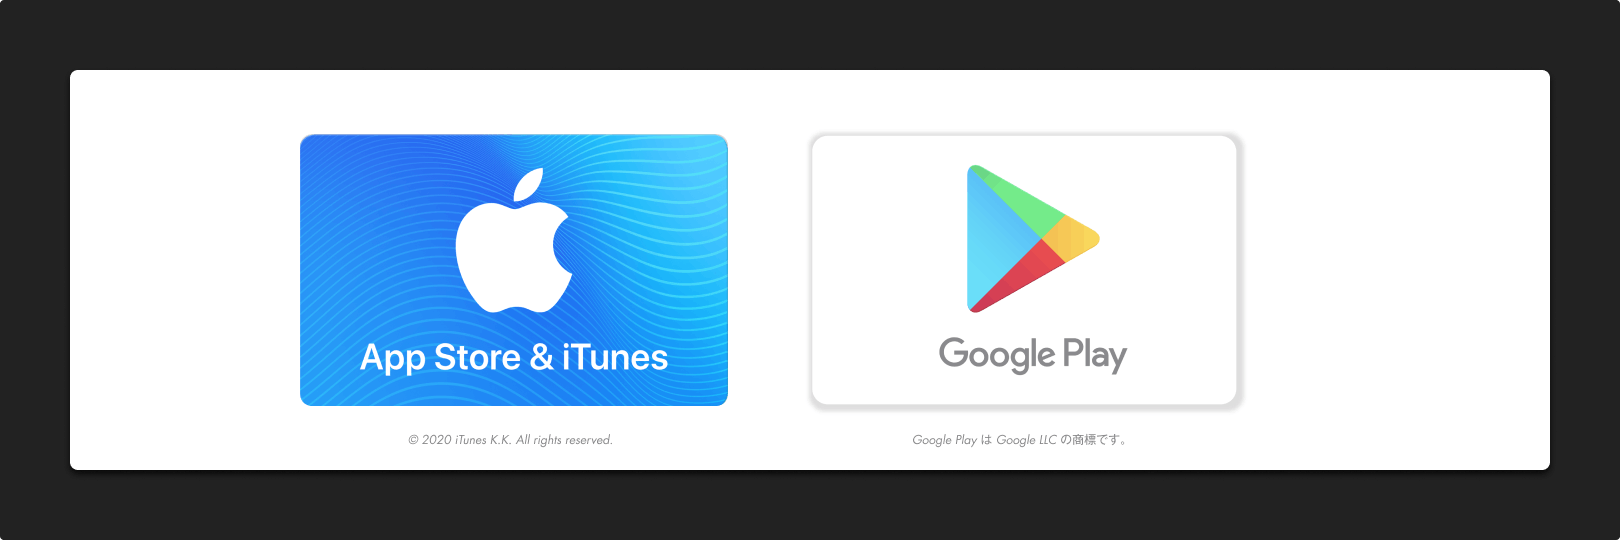 App Store&iTunes、Google Play